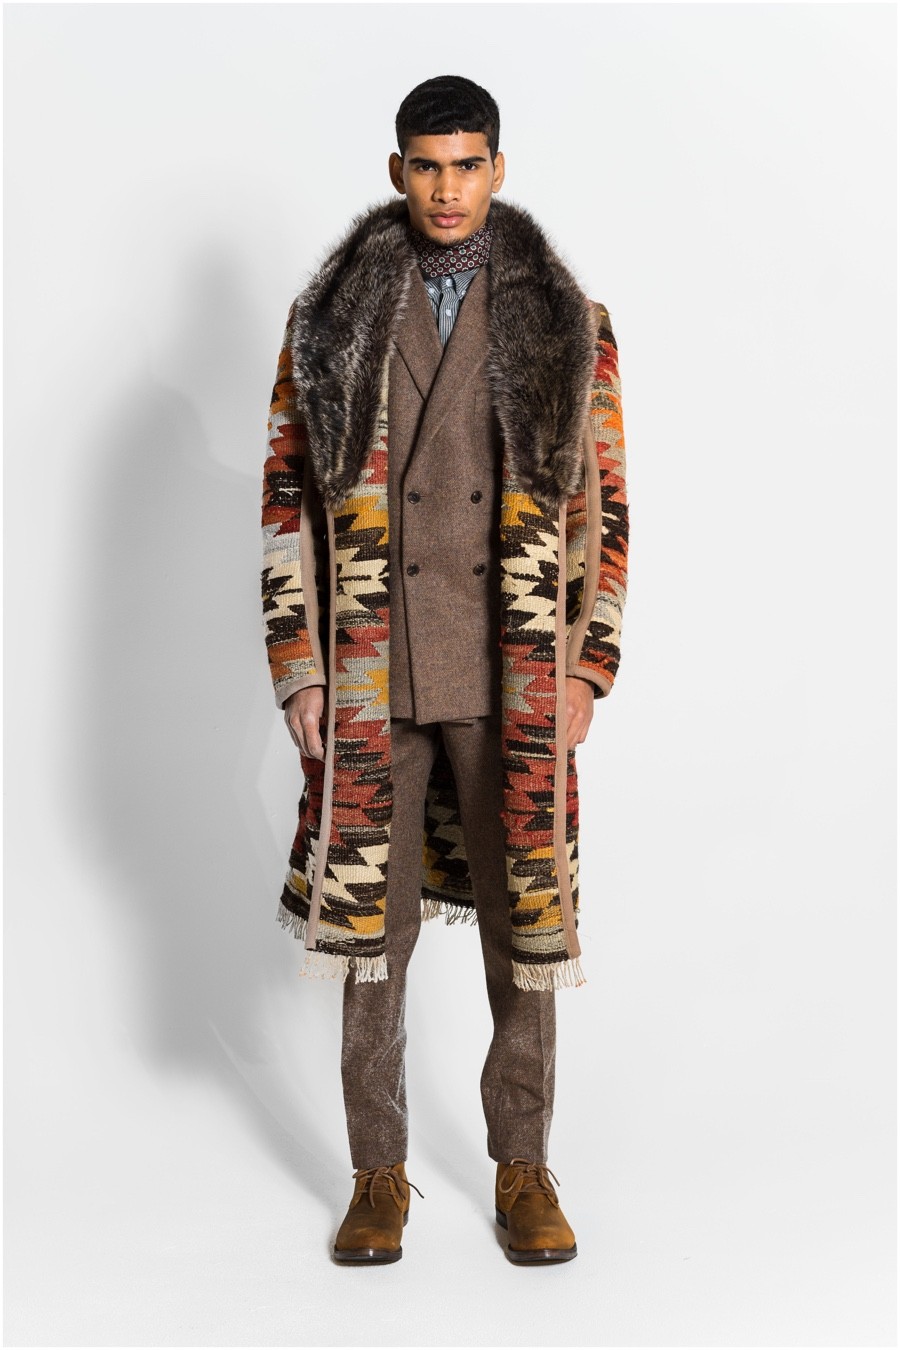 David Hart Fall Winter 2015 Menswear Collection 010